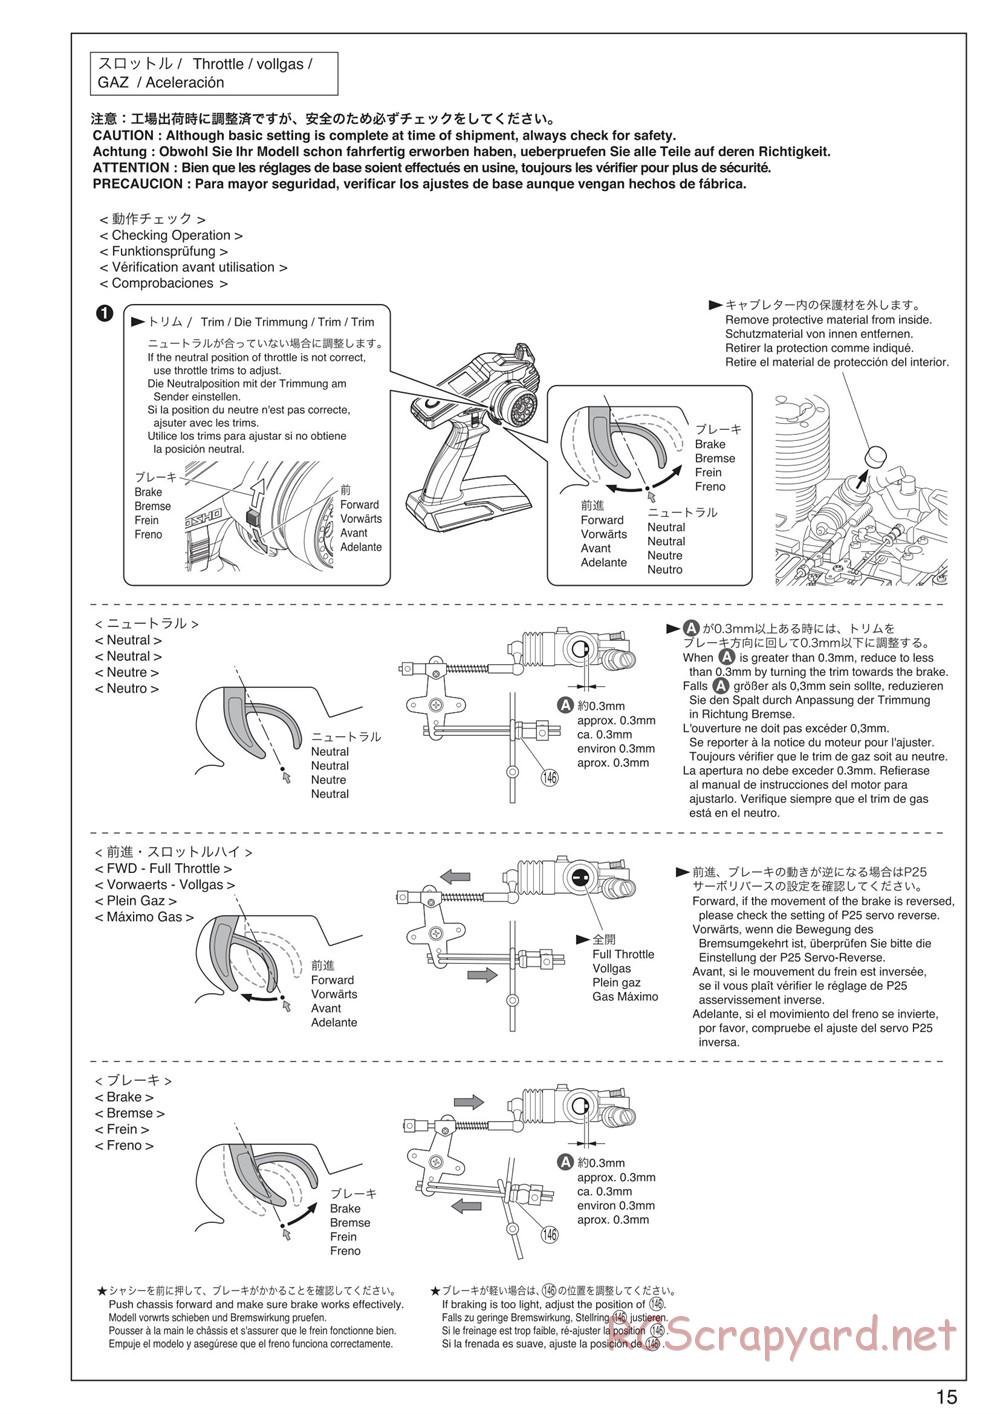 Kyosho - Inferno NEO ST Race Spec - Manual - Page 15